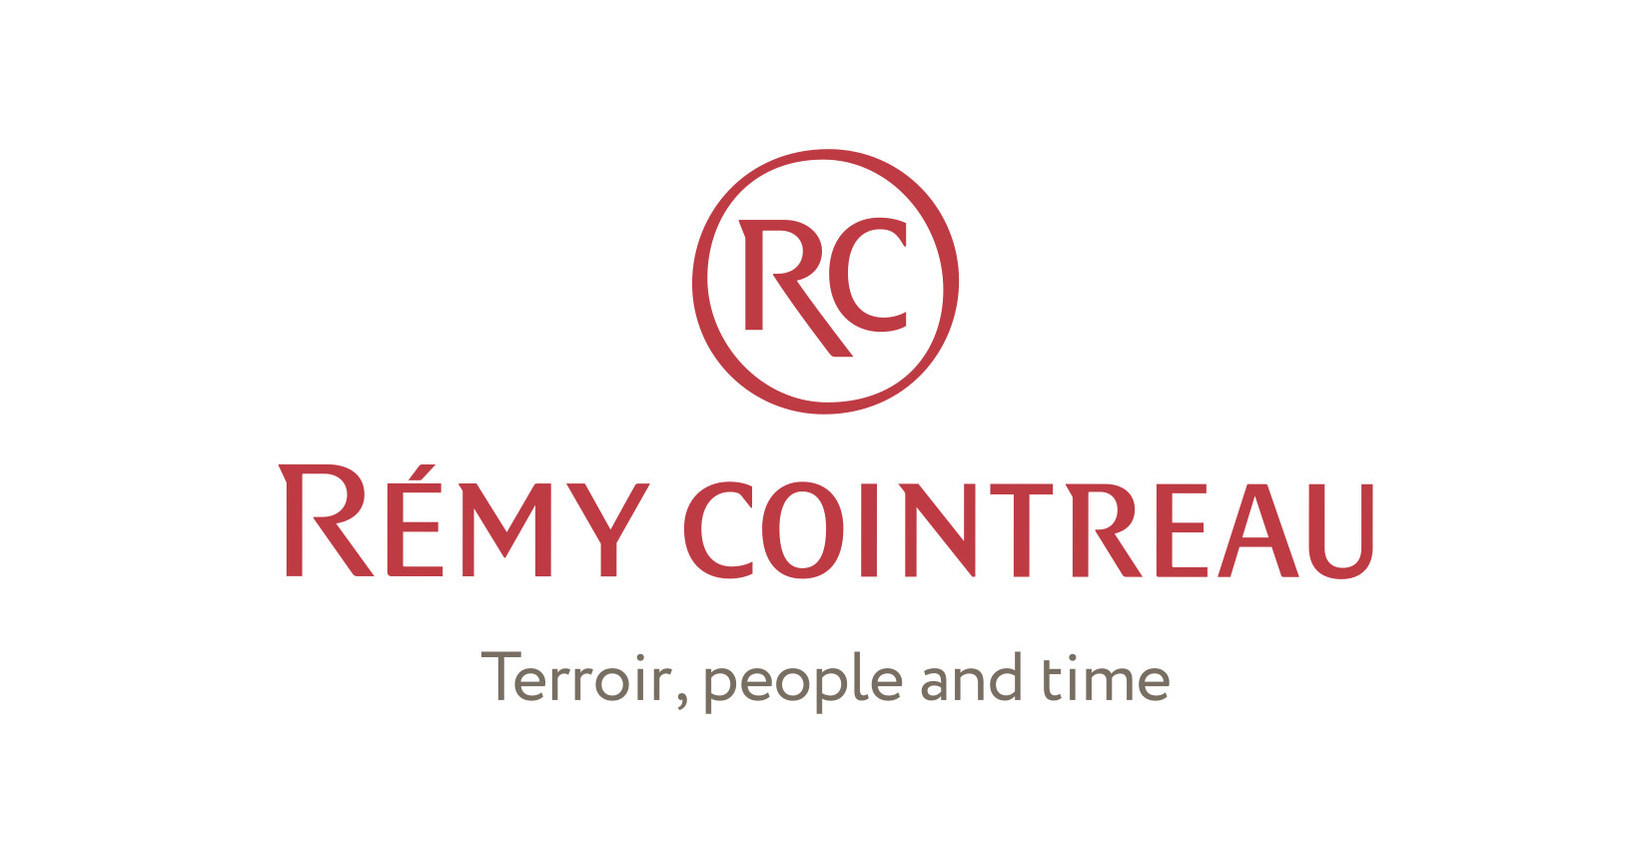 REMY COINTREAU Logo jpg?p=facebook.